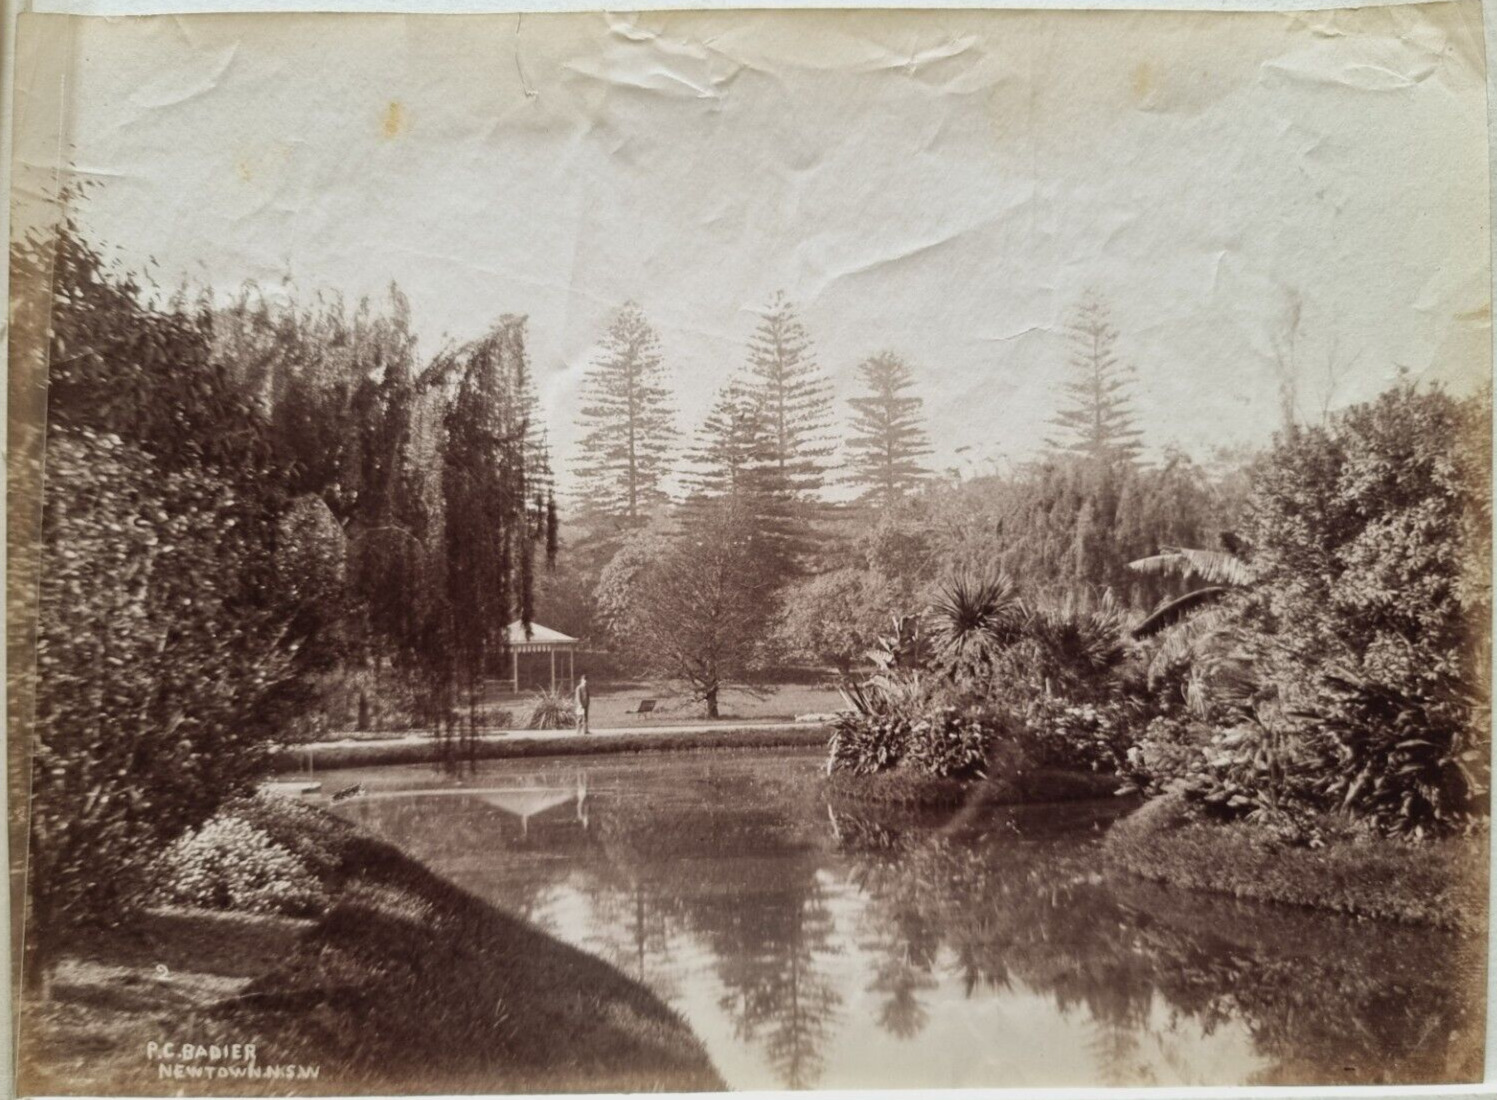 c 1883 SCARCE PHOTO SYDNEY BOTANIC GARDENS AUSTRALIA by P C BADIER NEWTOWN NSW